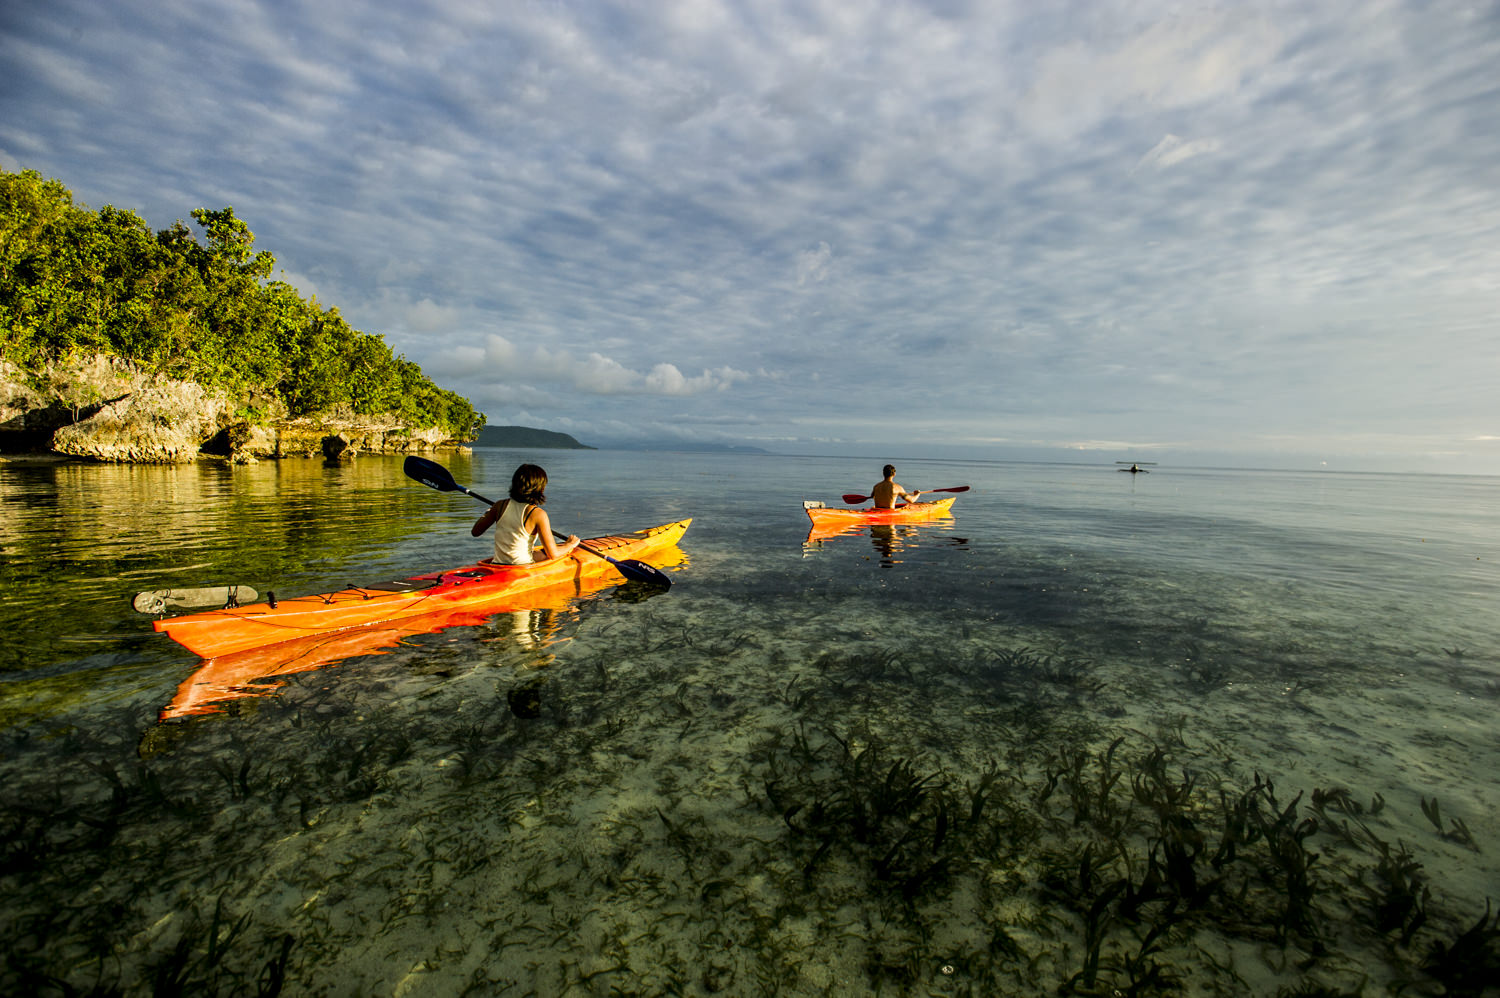 Diving and adventure tourism is increasingly popular in Raja Ampat